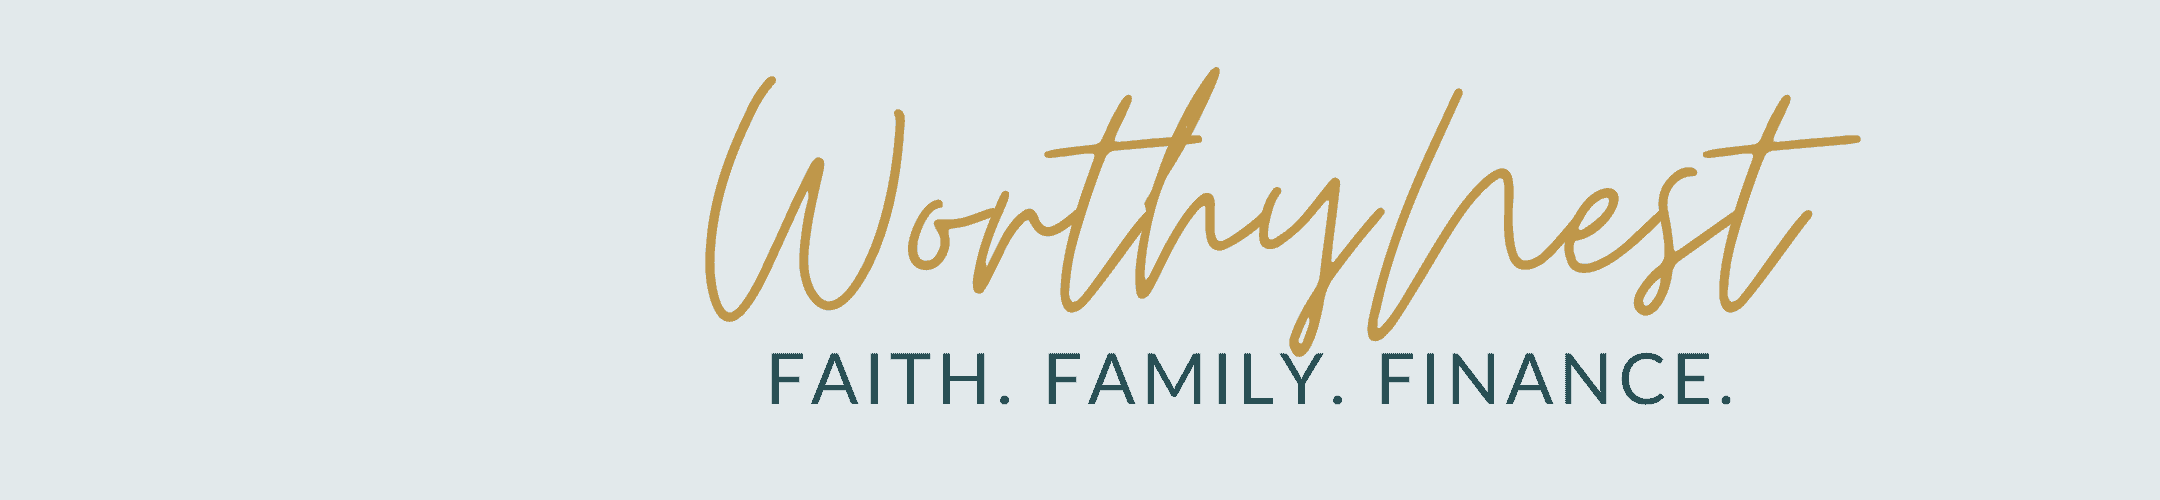 Elegant golden script announcing 'worthyfest,' emphasizing core values of faith, family, finance.